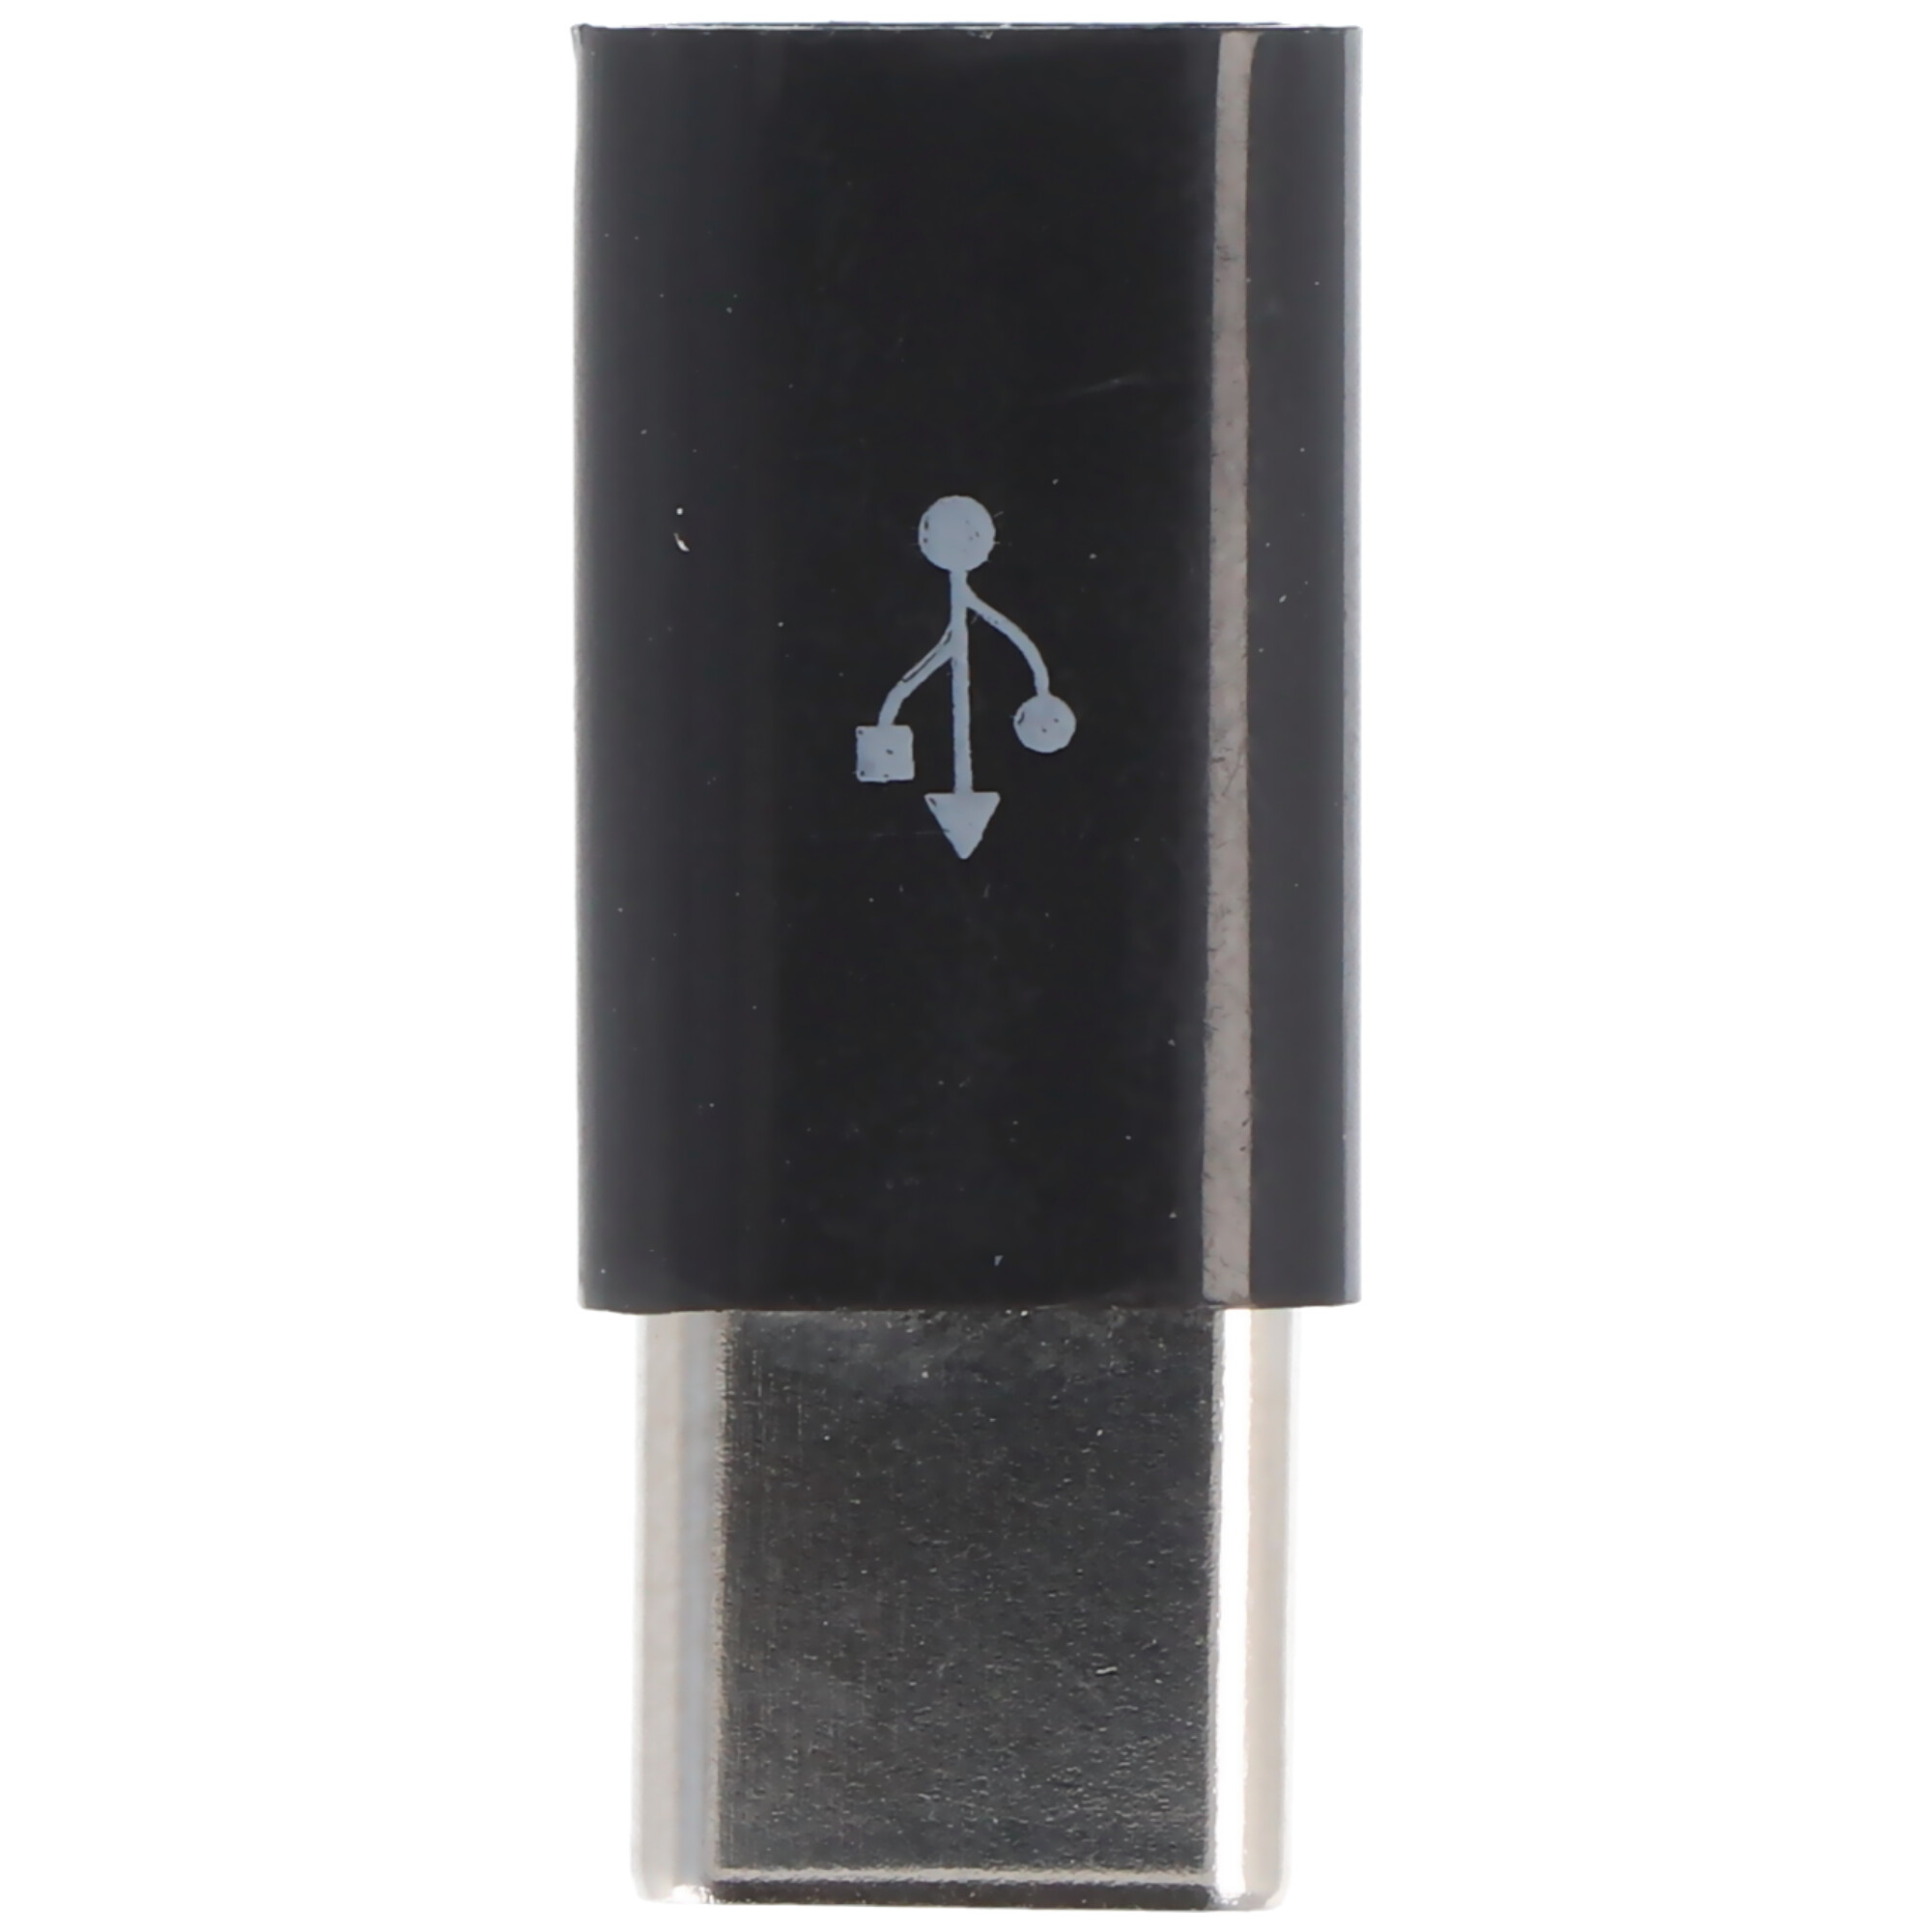 AccuCell Adapter Micro-USB 2.0 Buchse auf USB Type C USB-C Stecker schwarz